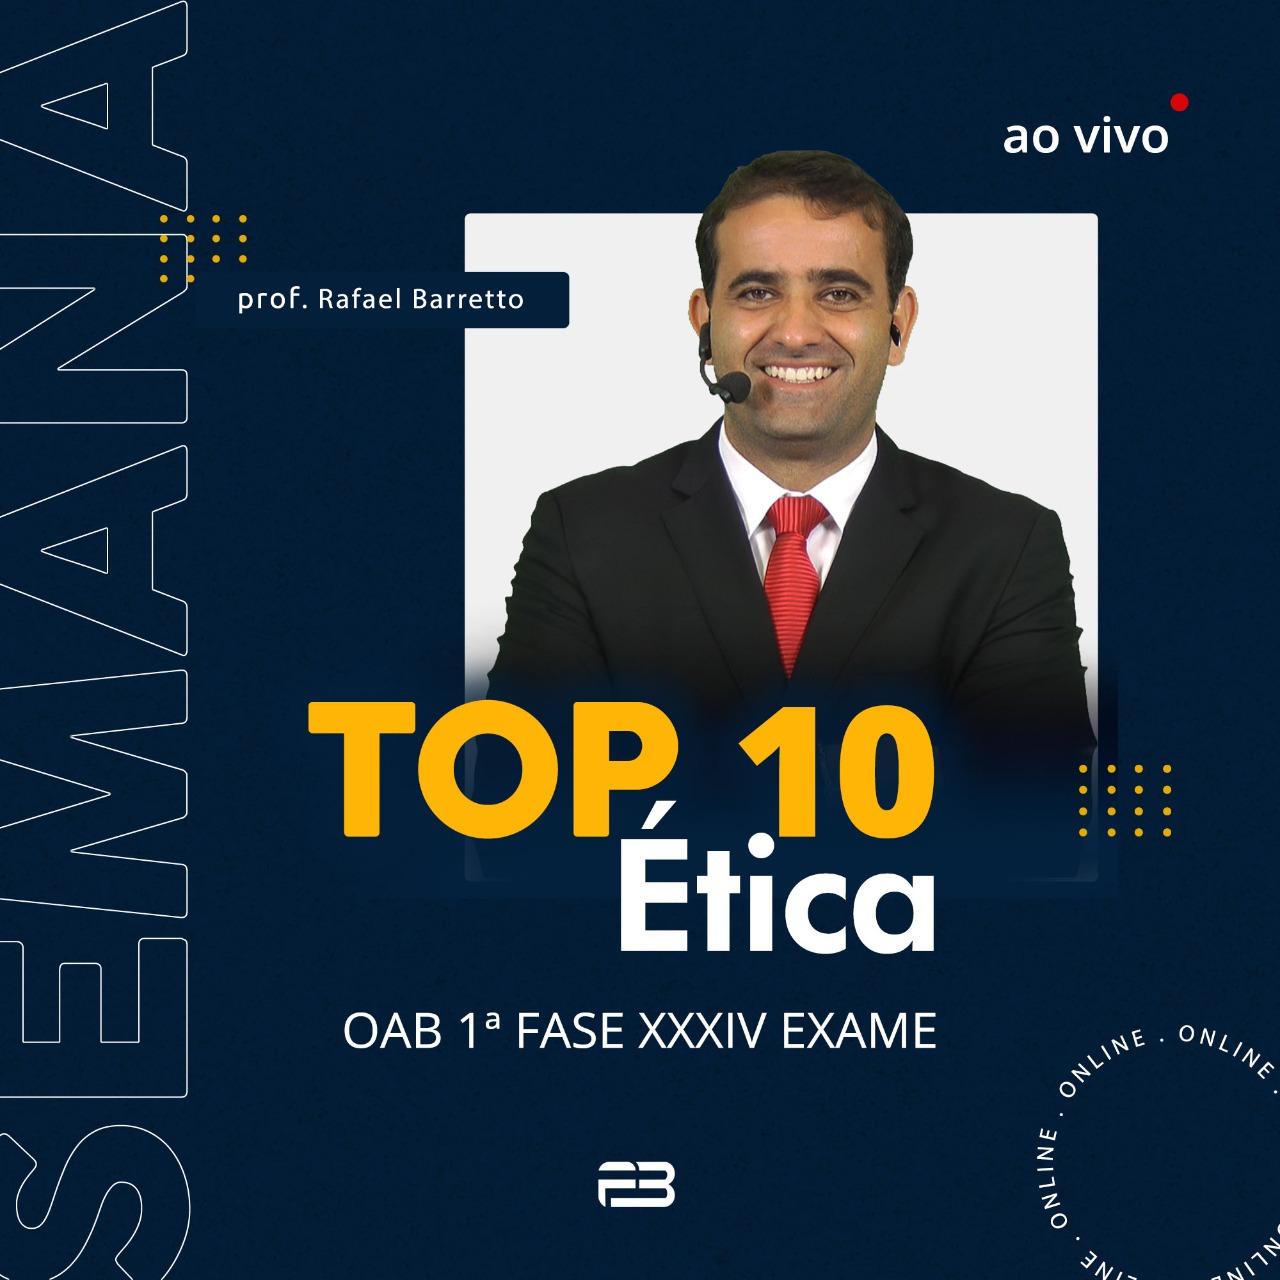 TOP 10 ÉTICA - OAB 1º FASE XXXIV EXAME